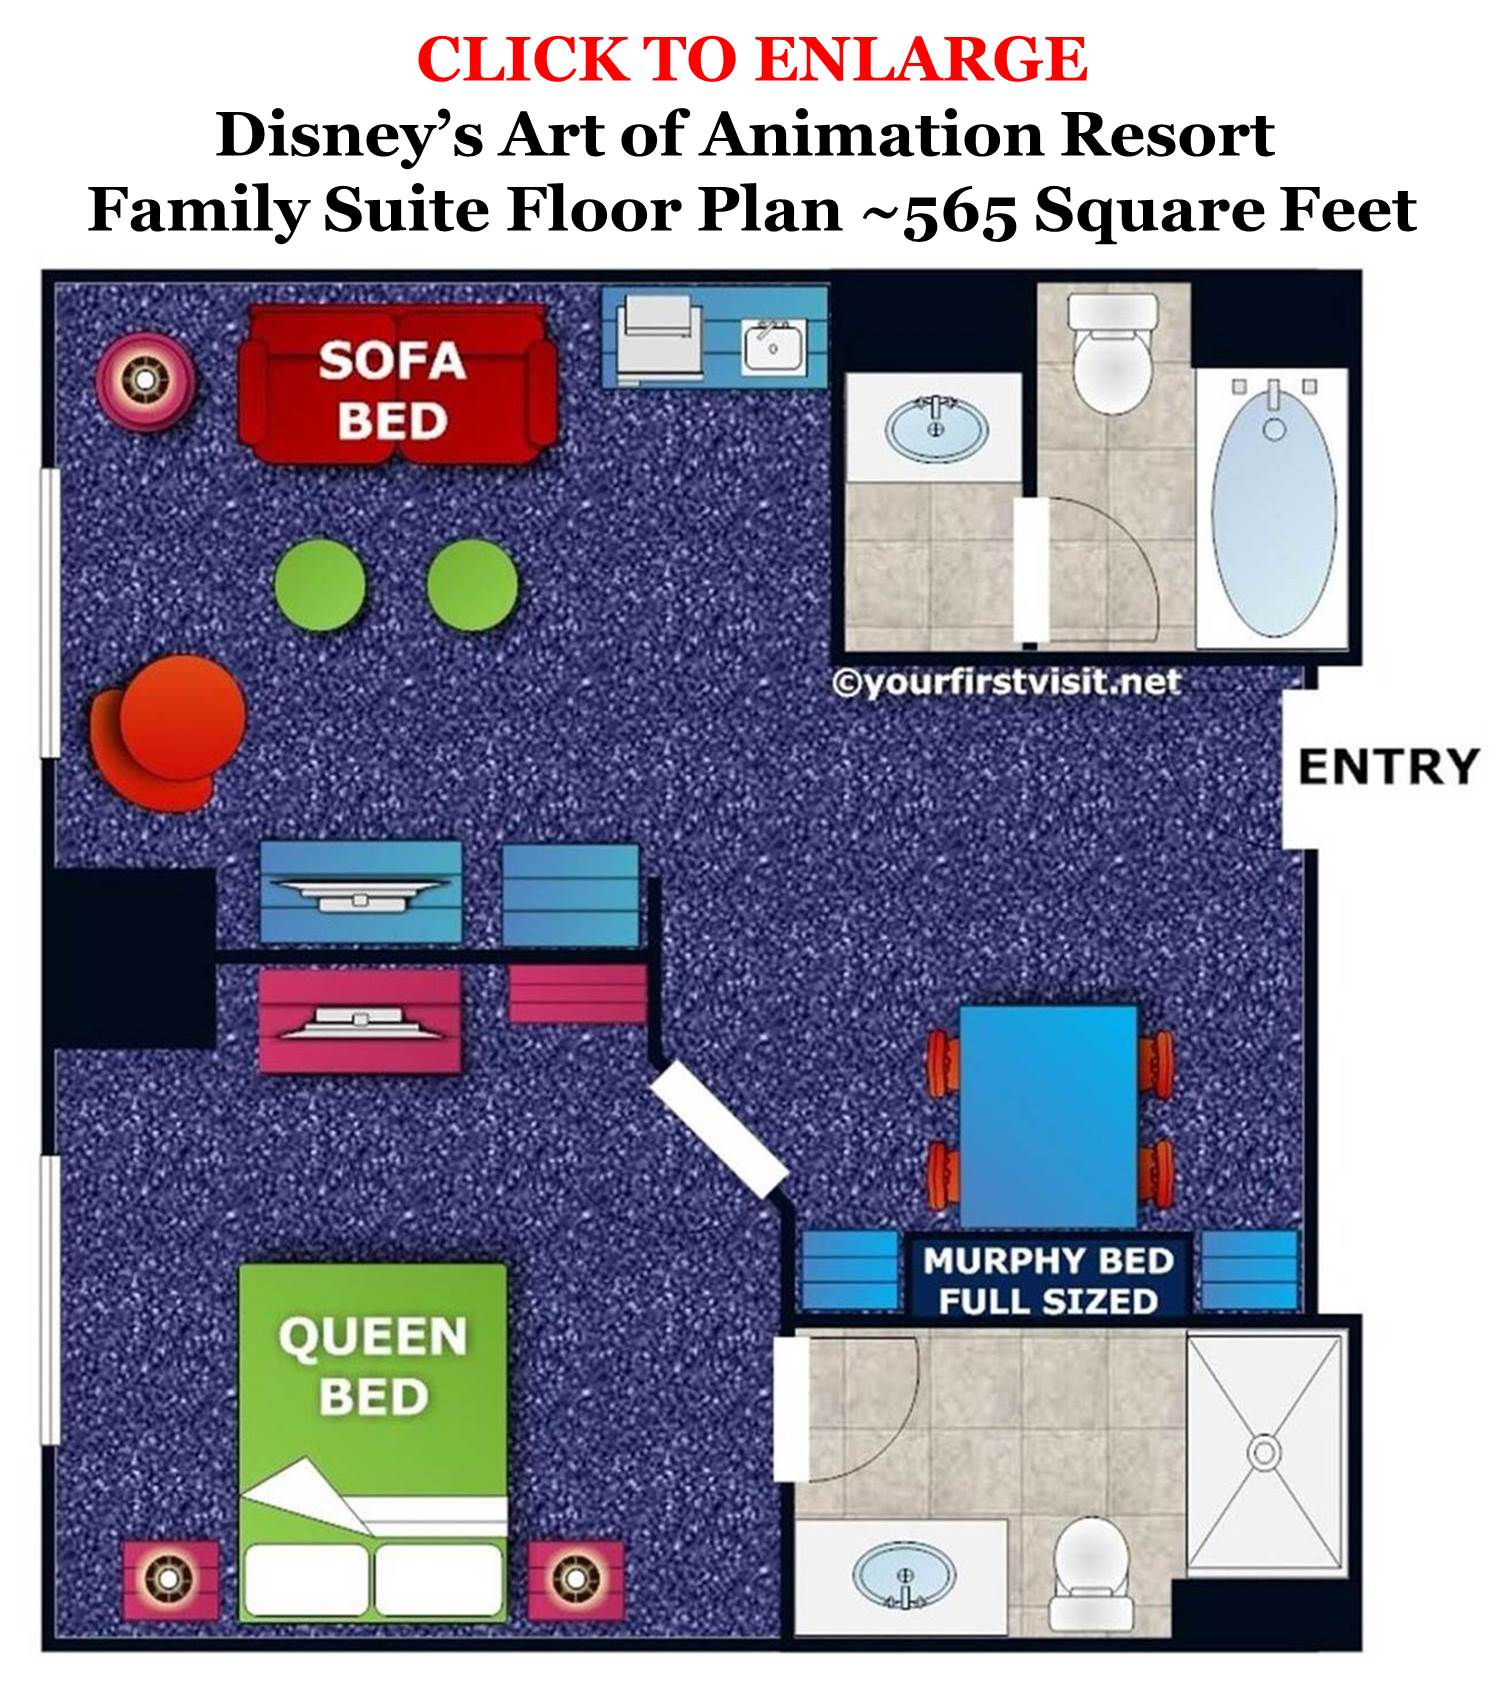 Review Disney's Art of Animation Resort